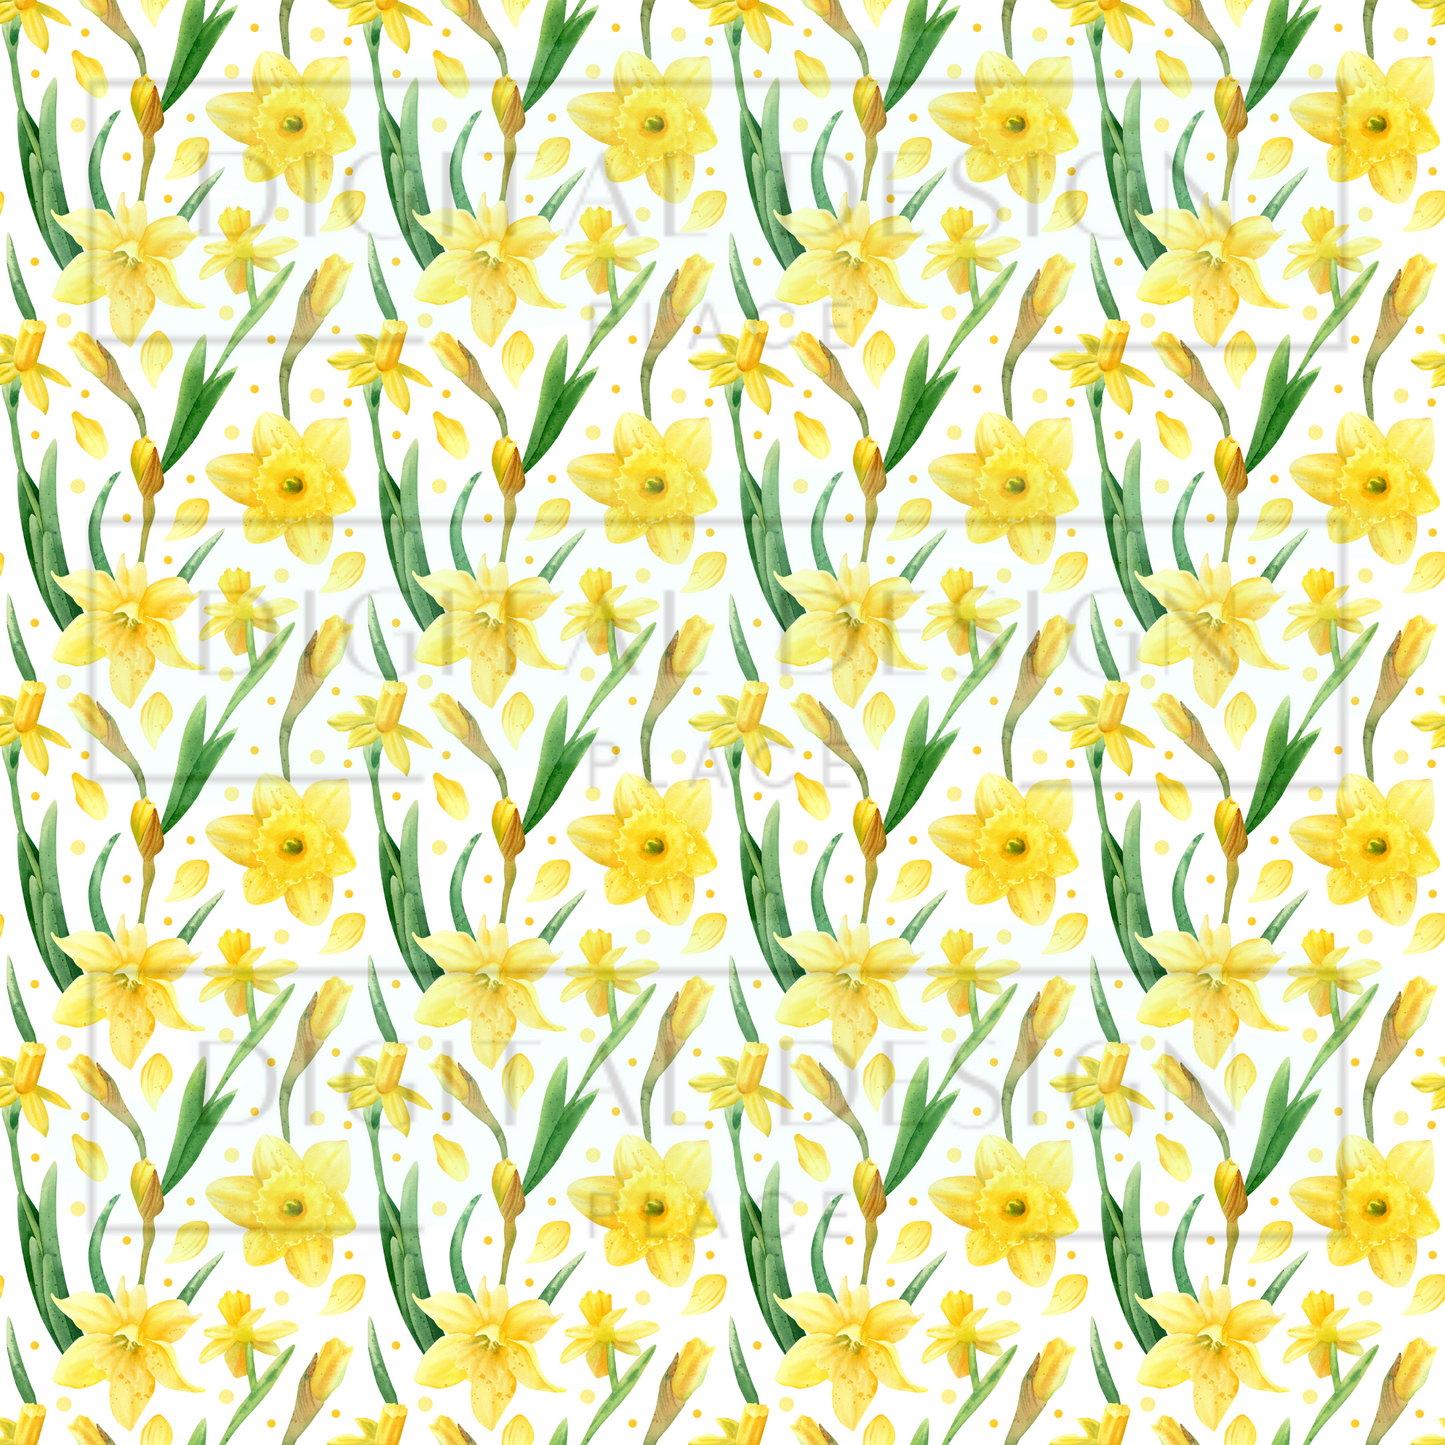 Daffodil Dreams VinylV196